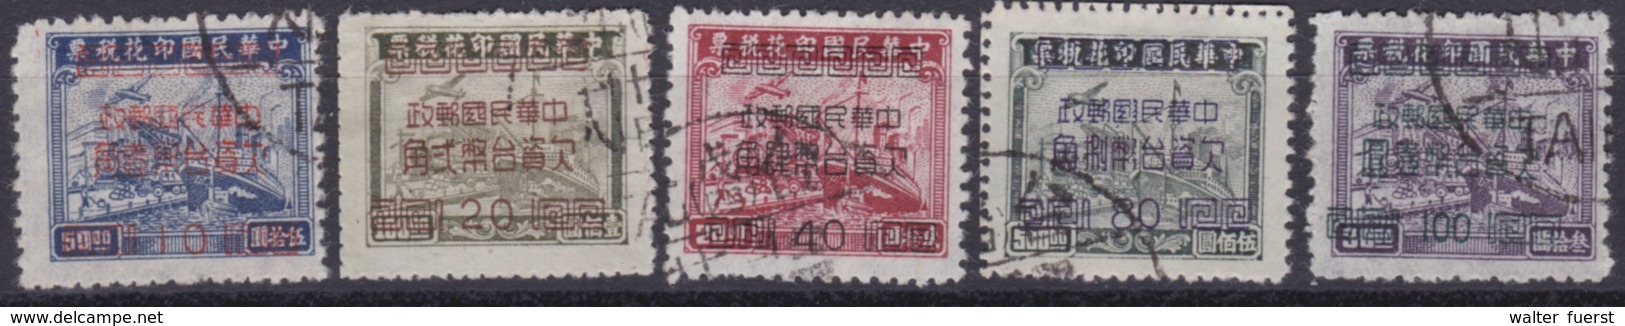 Taiwan-Rep. China 1953, PORTO, Serie Used, Very Fine - Segnatasse